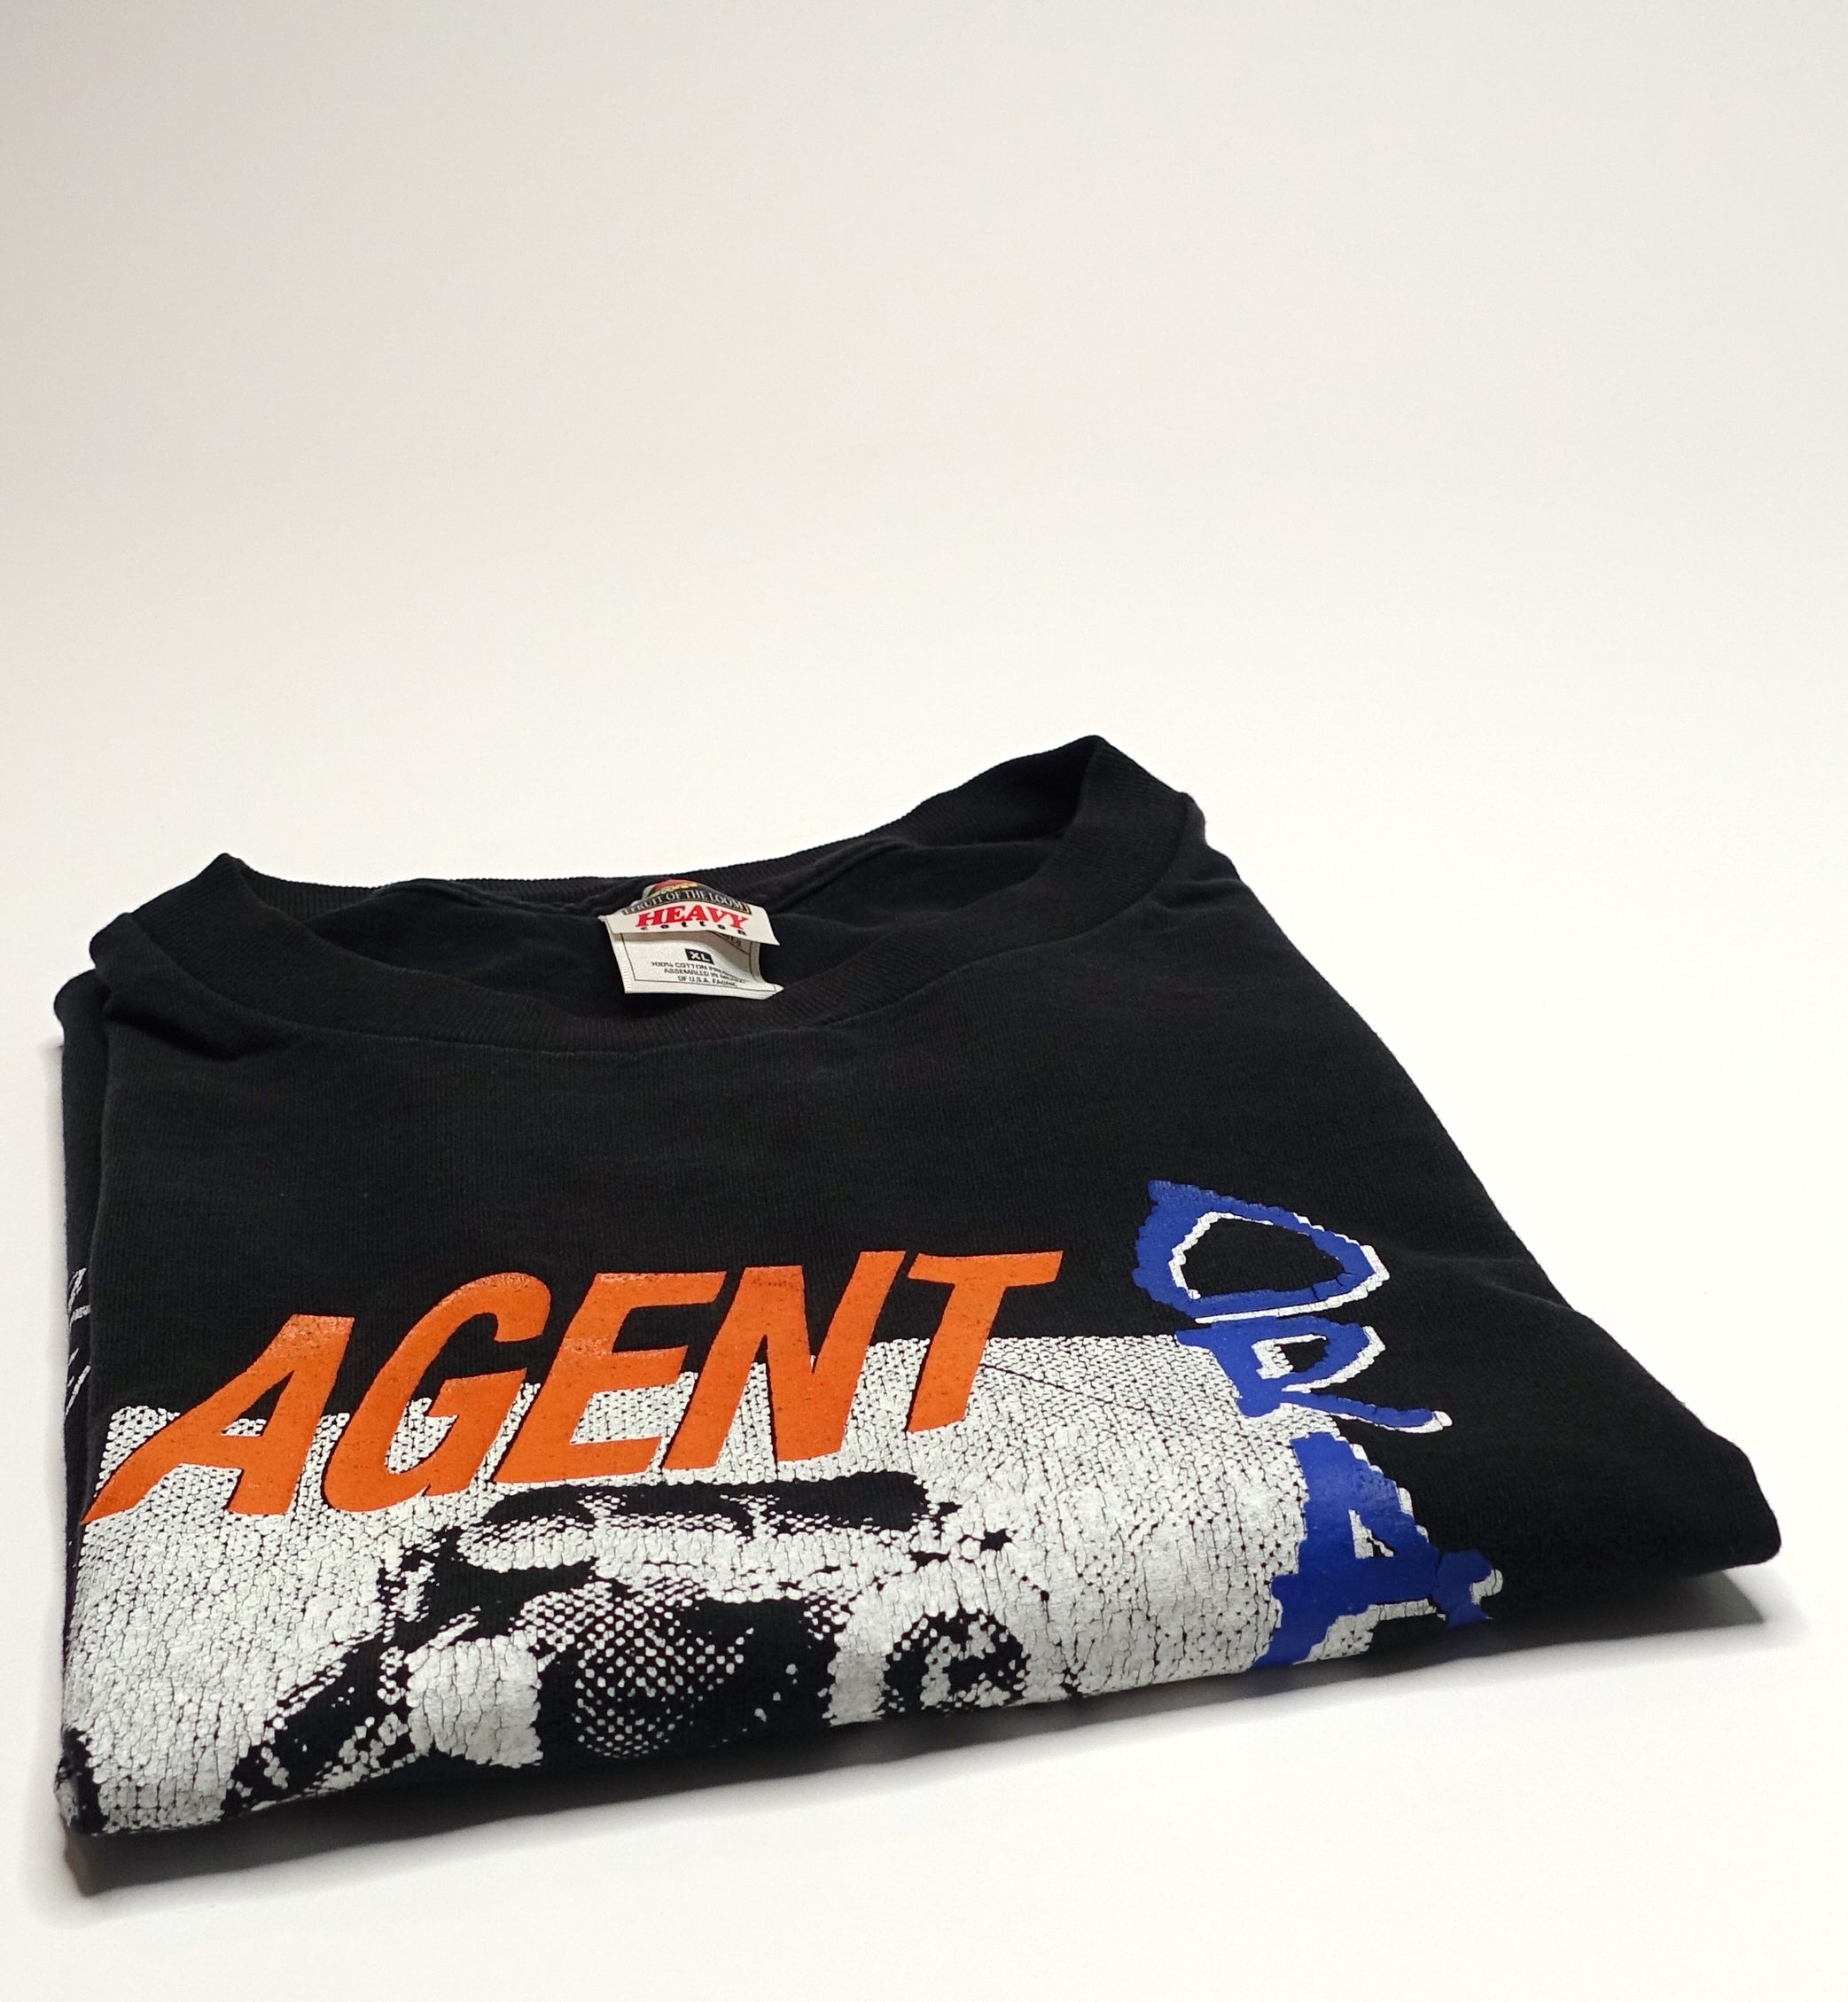 Agent Orange - Virtually Indestructible 90's Tour Shirt Size XL